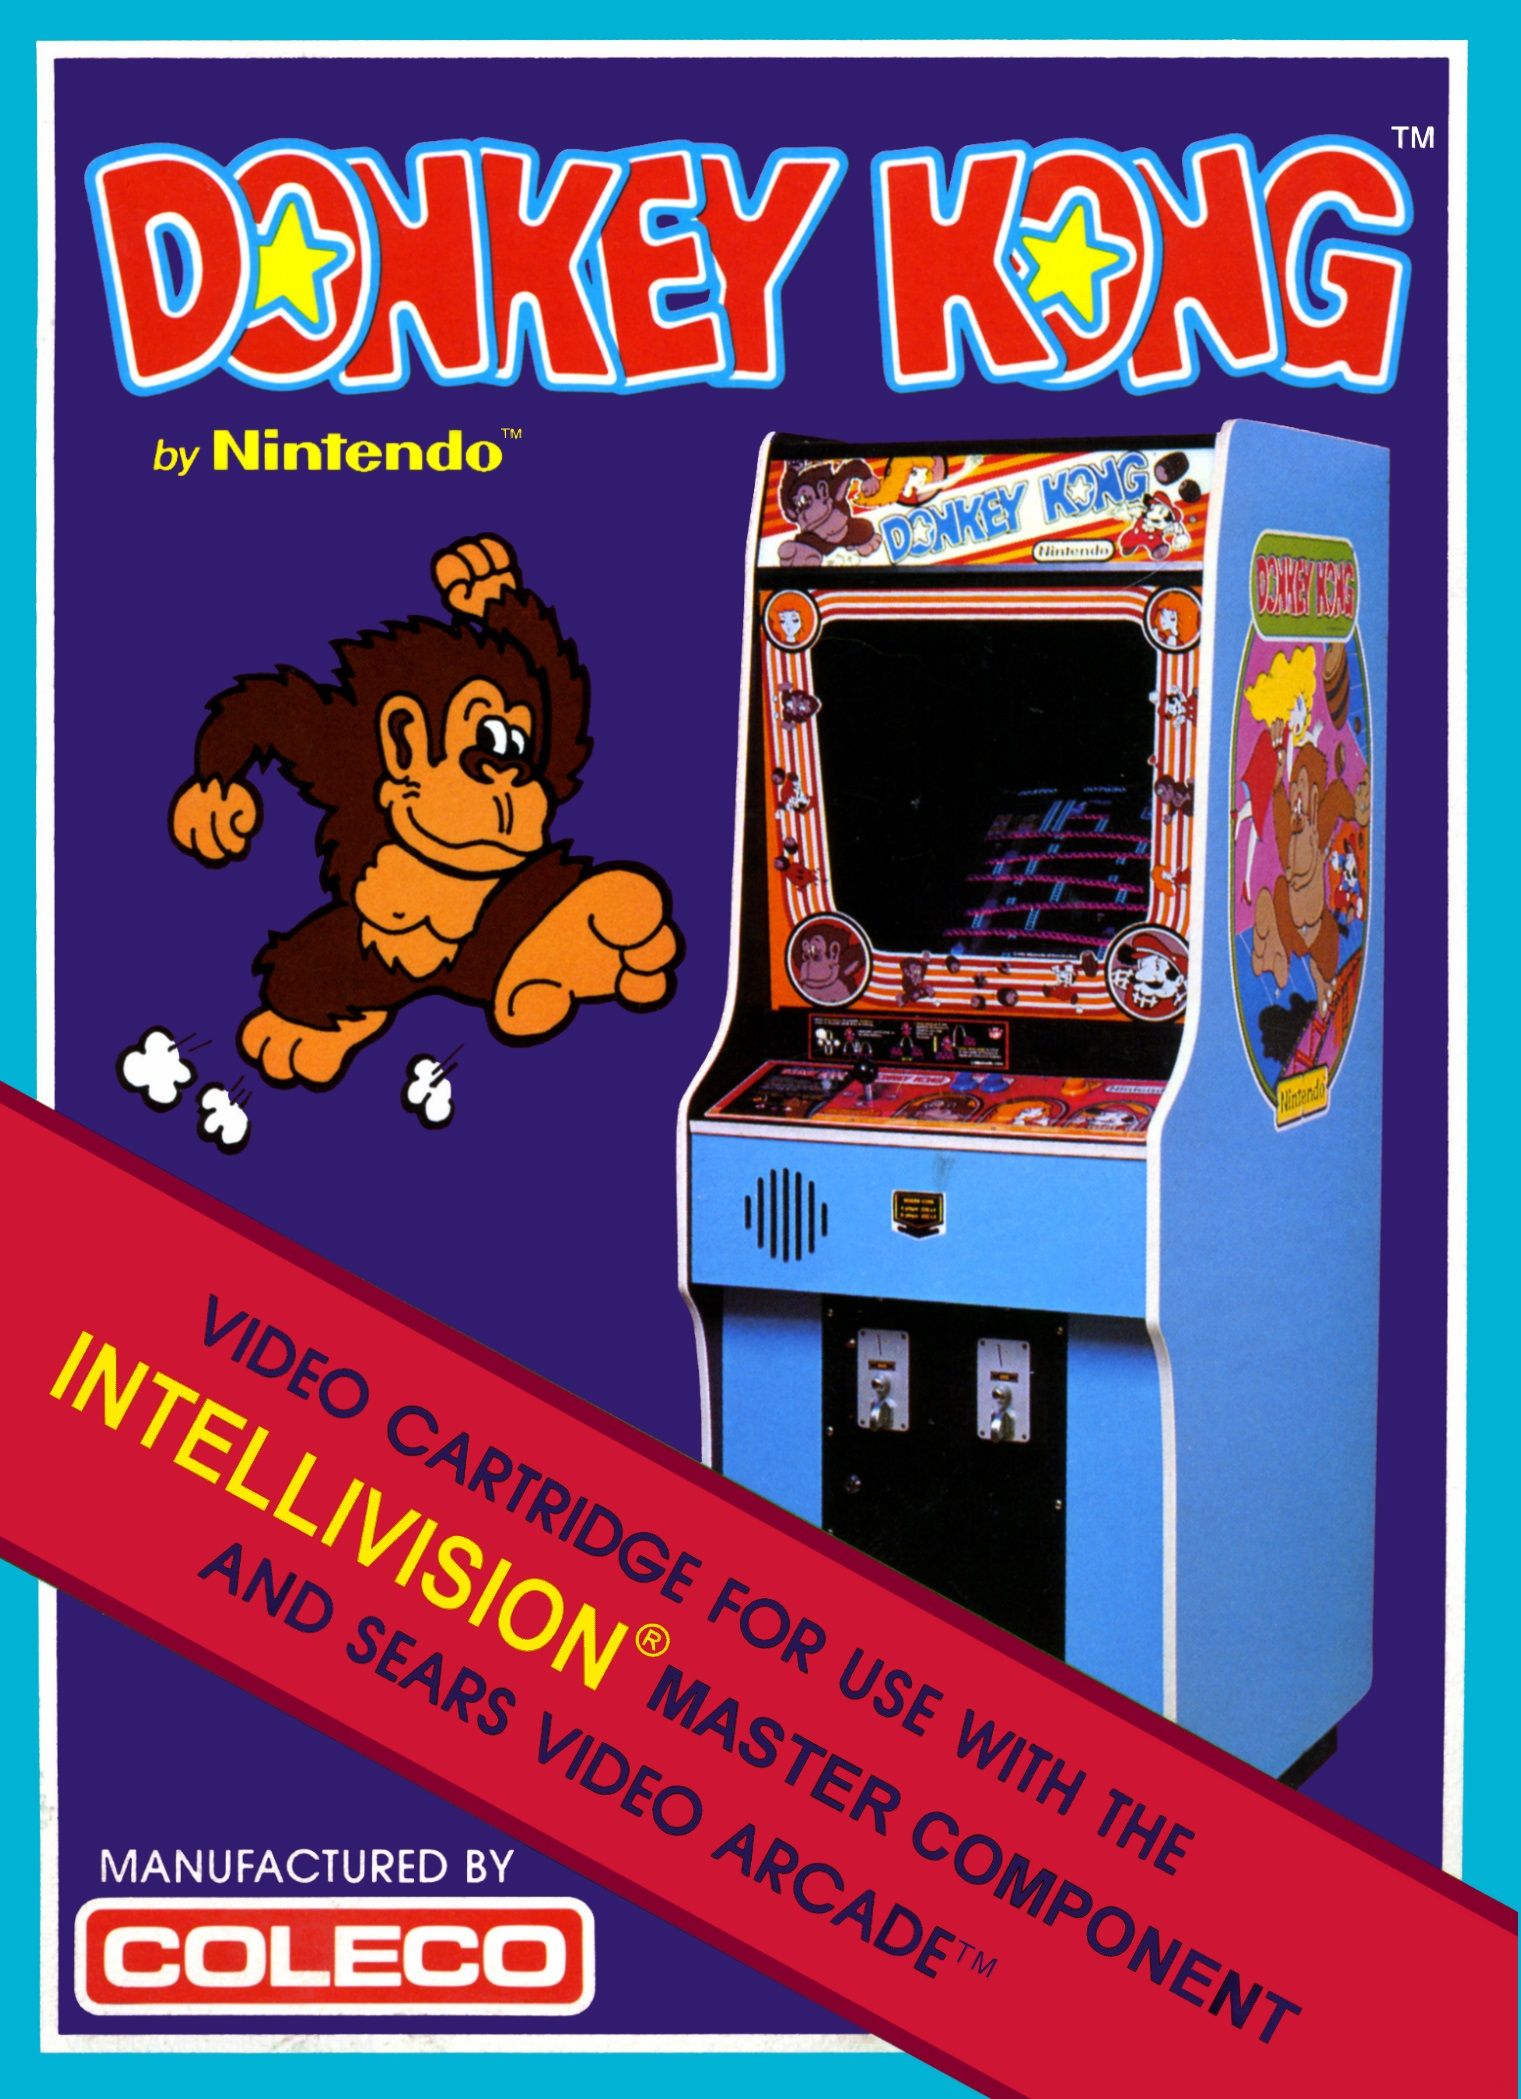 Donkey Kong Video Game